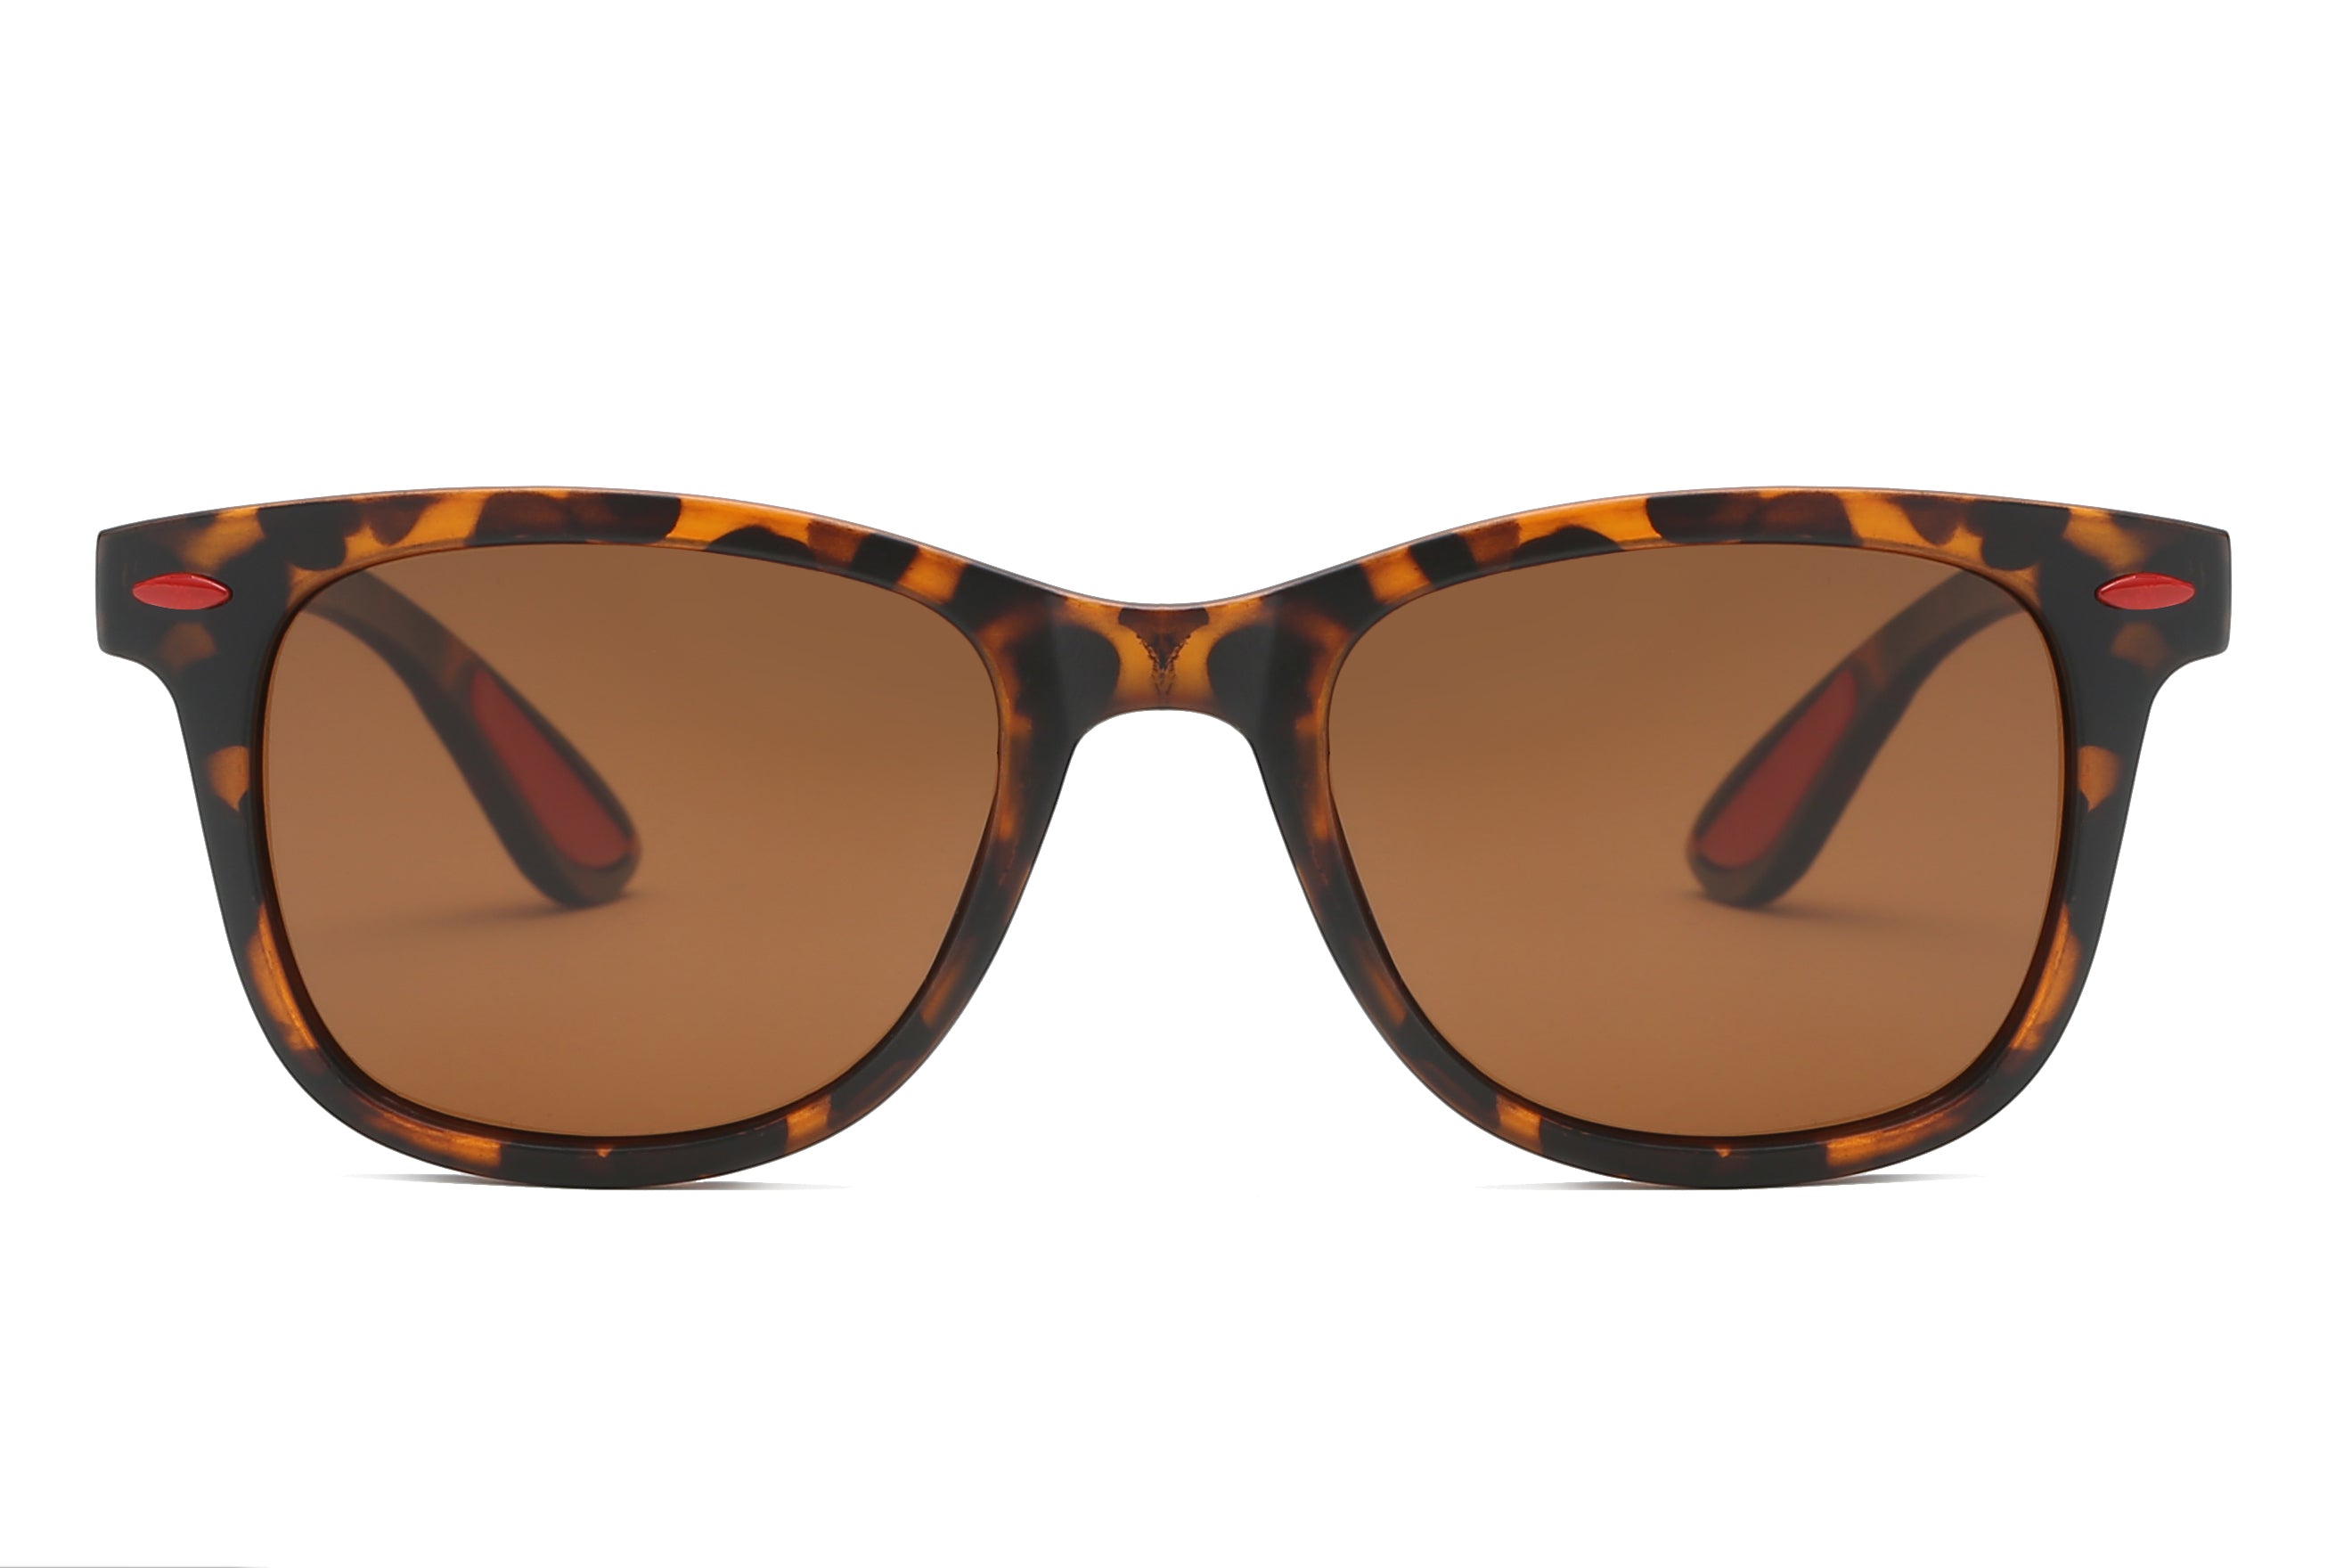 P2093 - Classic Retro Vintage Polarized Fashion Sunglasses - Iris Fashion Inc. | Wholesale Sunglasses and Glasses